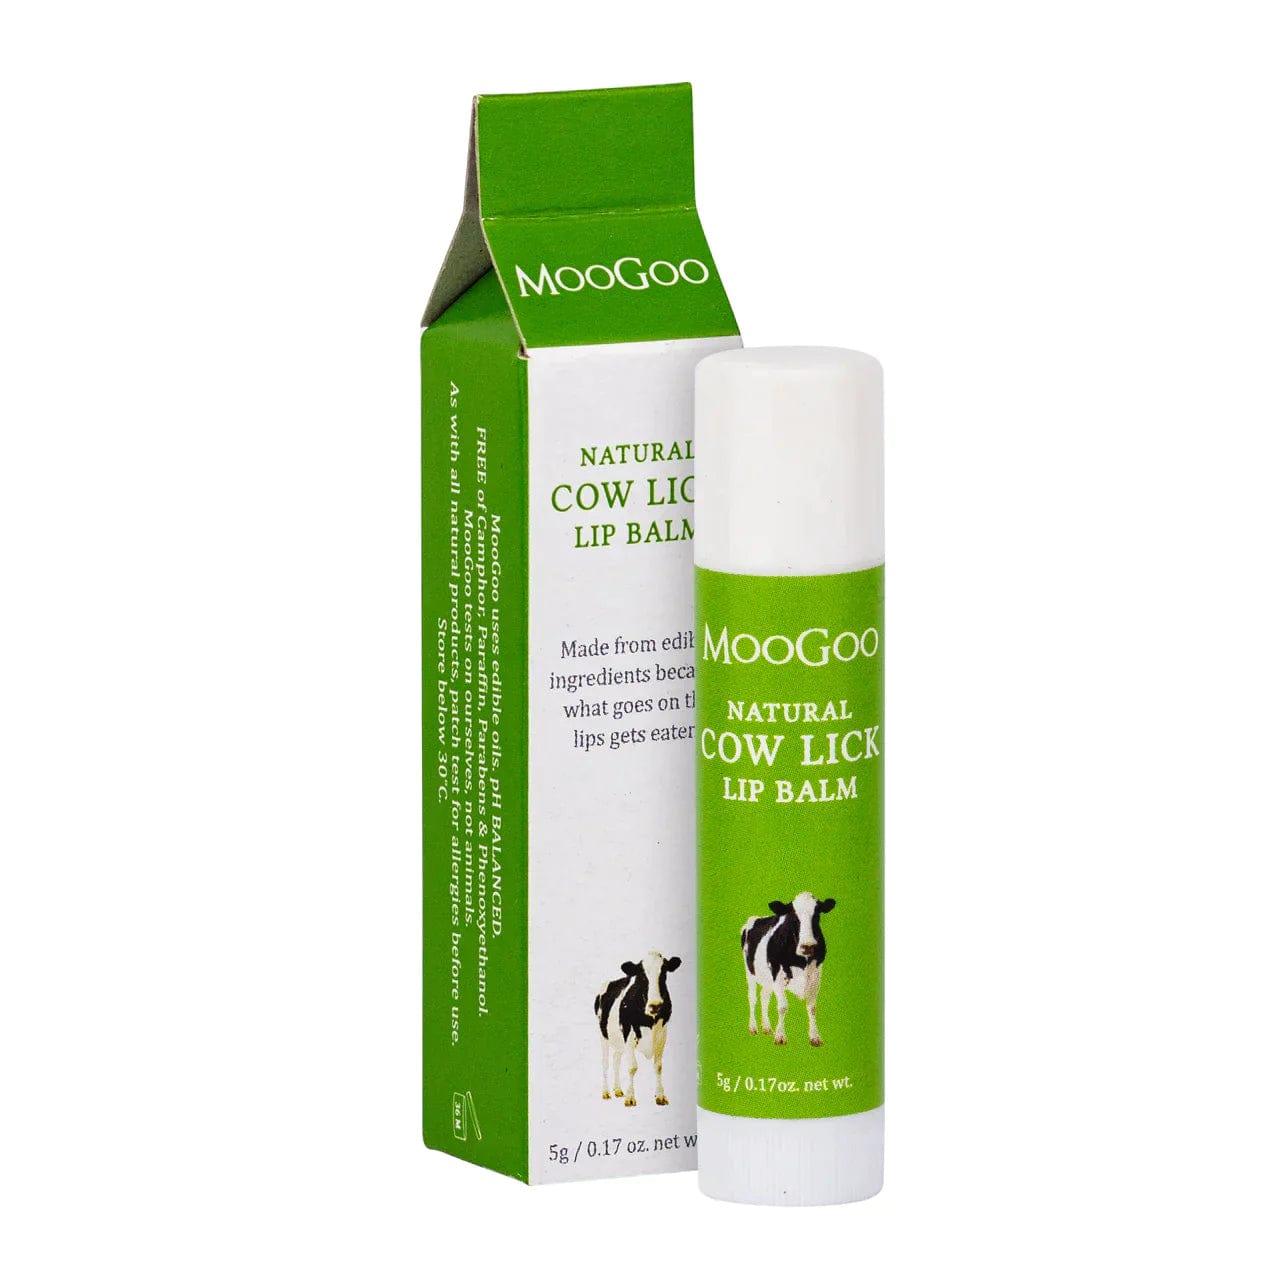 MooGoo Natural Cow Lick Lip Balm 5g - welzo